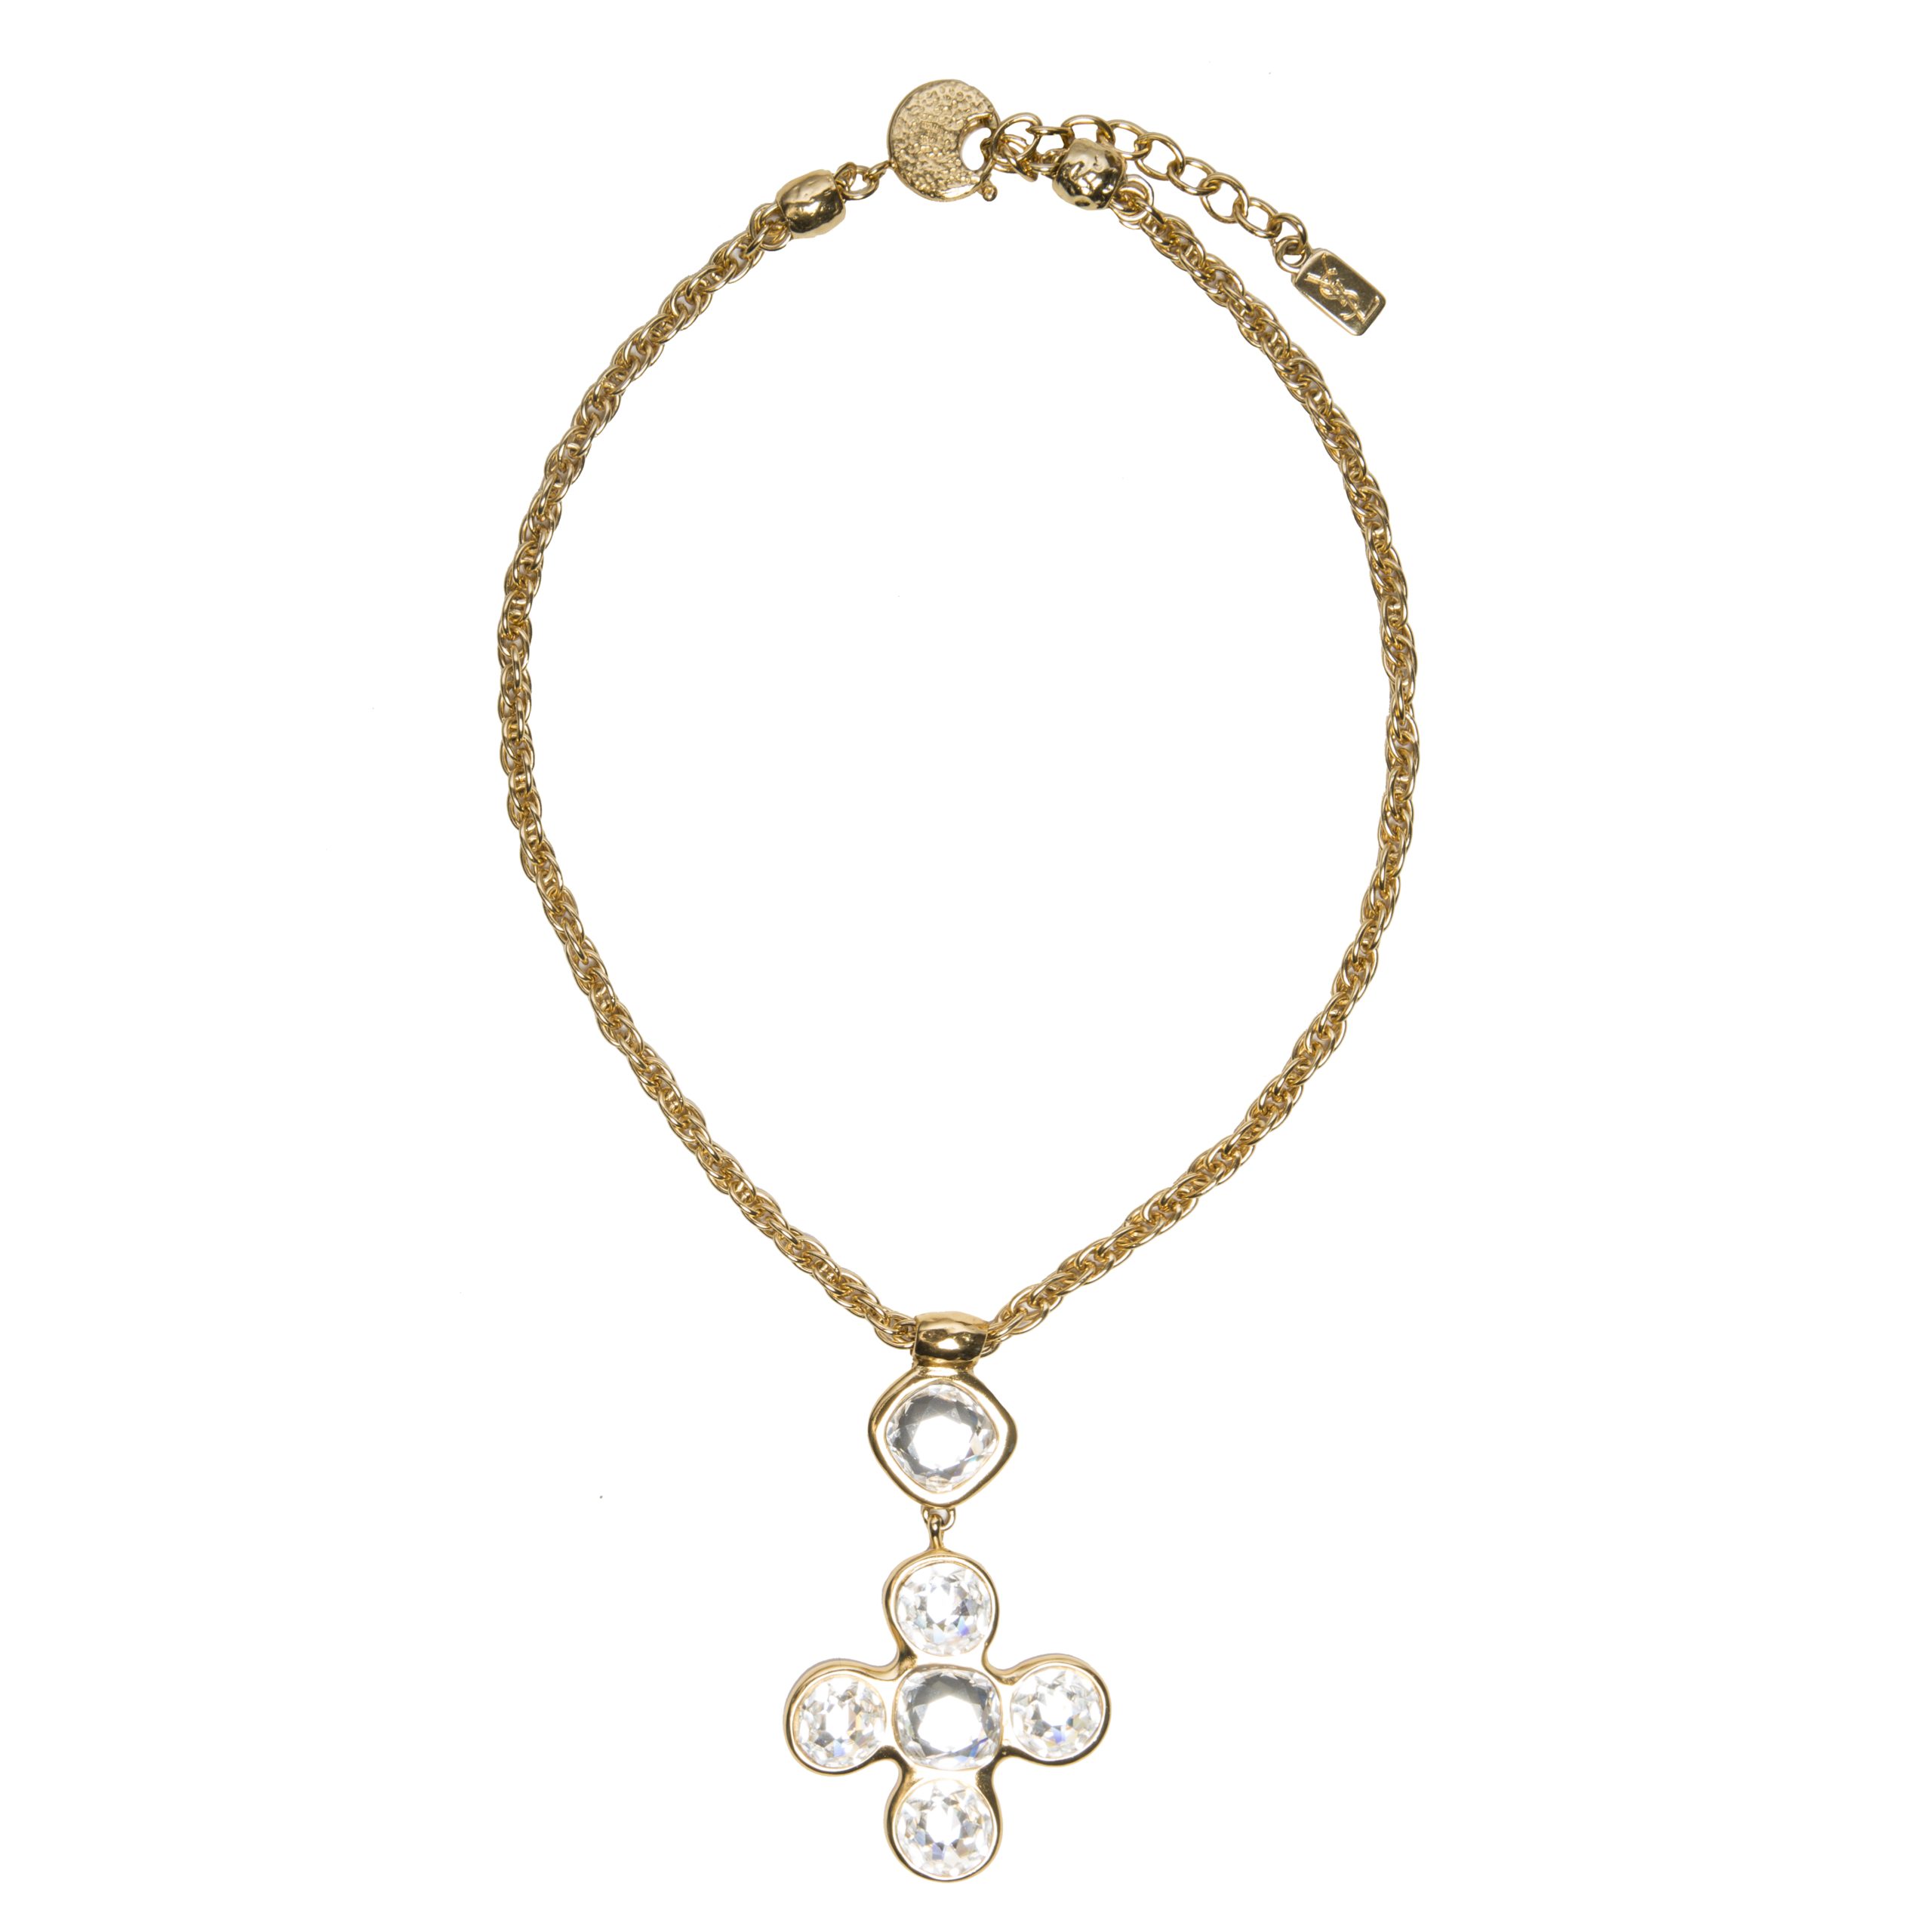 Vintage jewelled crystal cross necklace